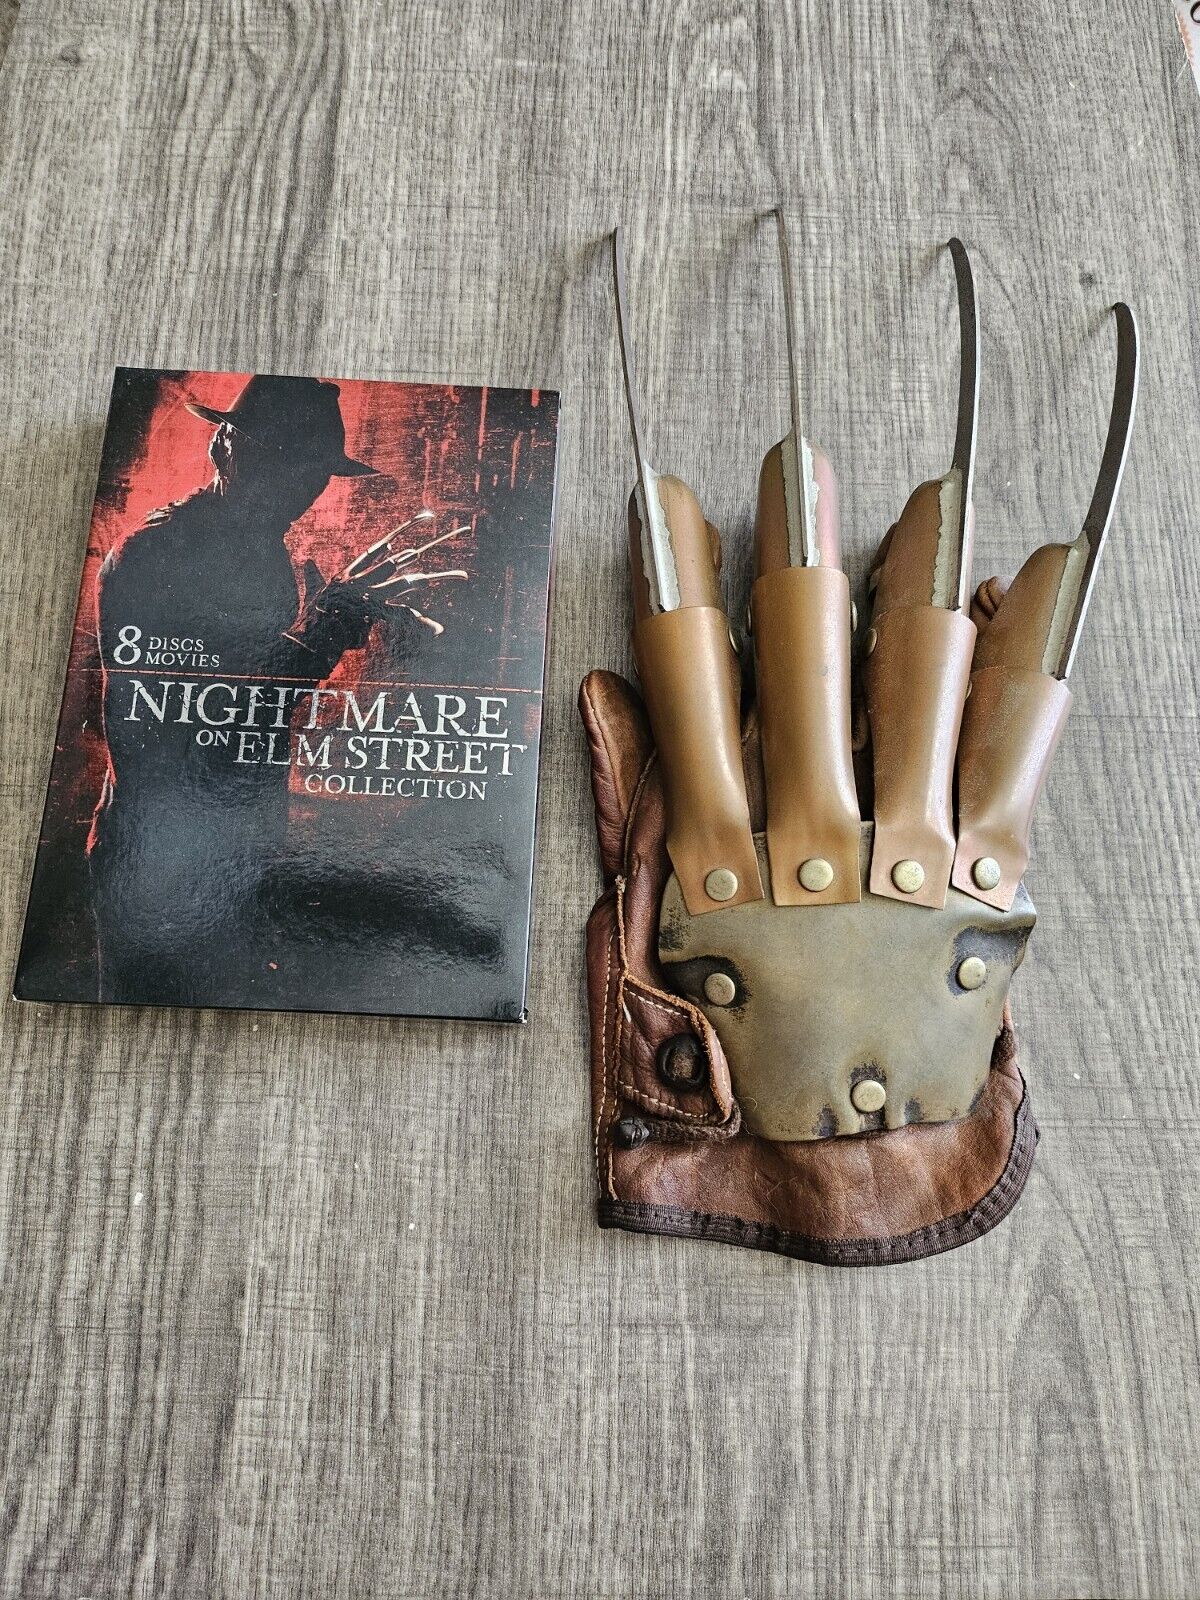 Handmade With Real Metal Blades A Nightmare On Elm Street Freddy Krueger Glove